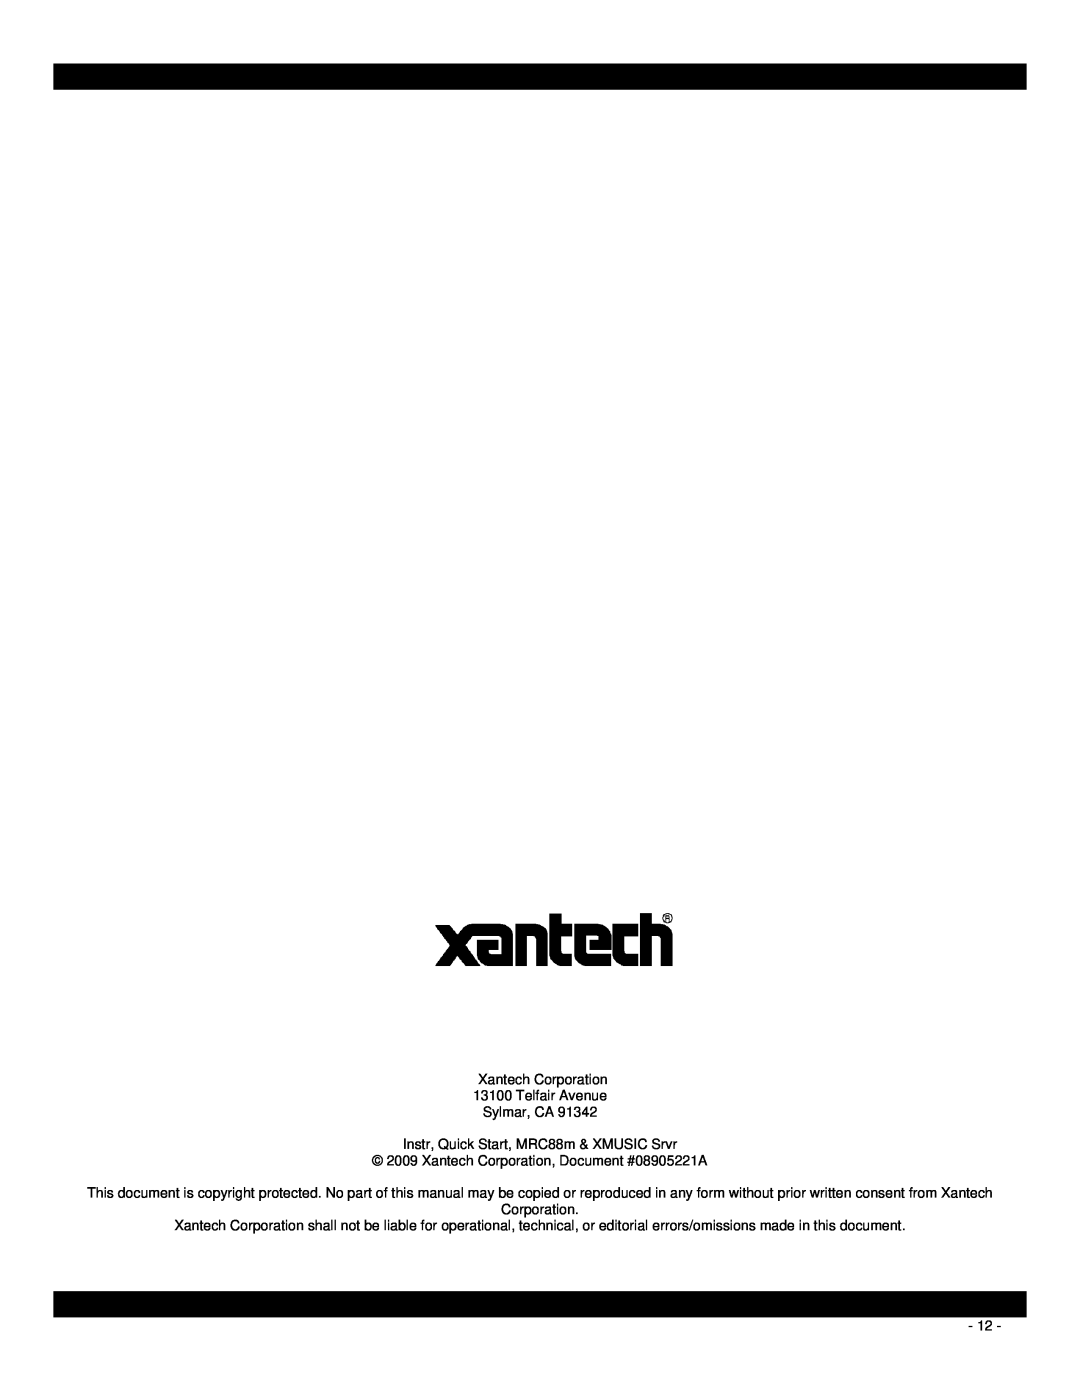 Xantech MRC88M quick start Xantech Corporation 13100 Telfair Avenue, Sylmar, CA, Instr, Quick Start, MRC88m & XMUSIC Srvr 